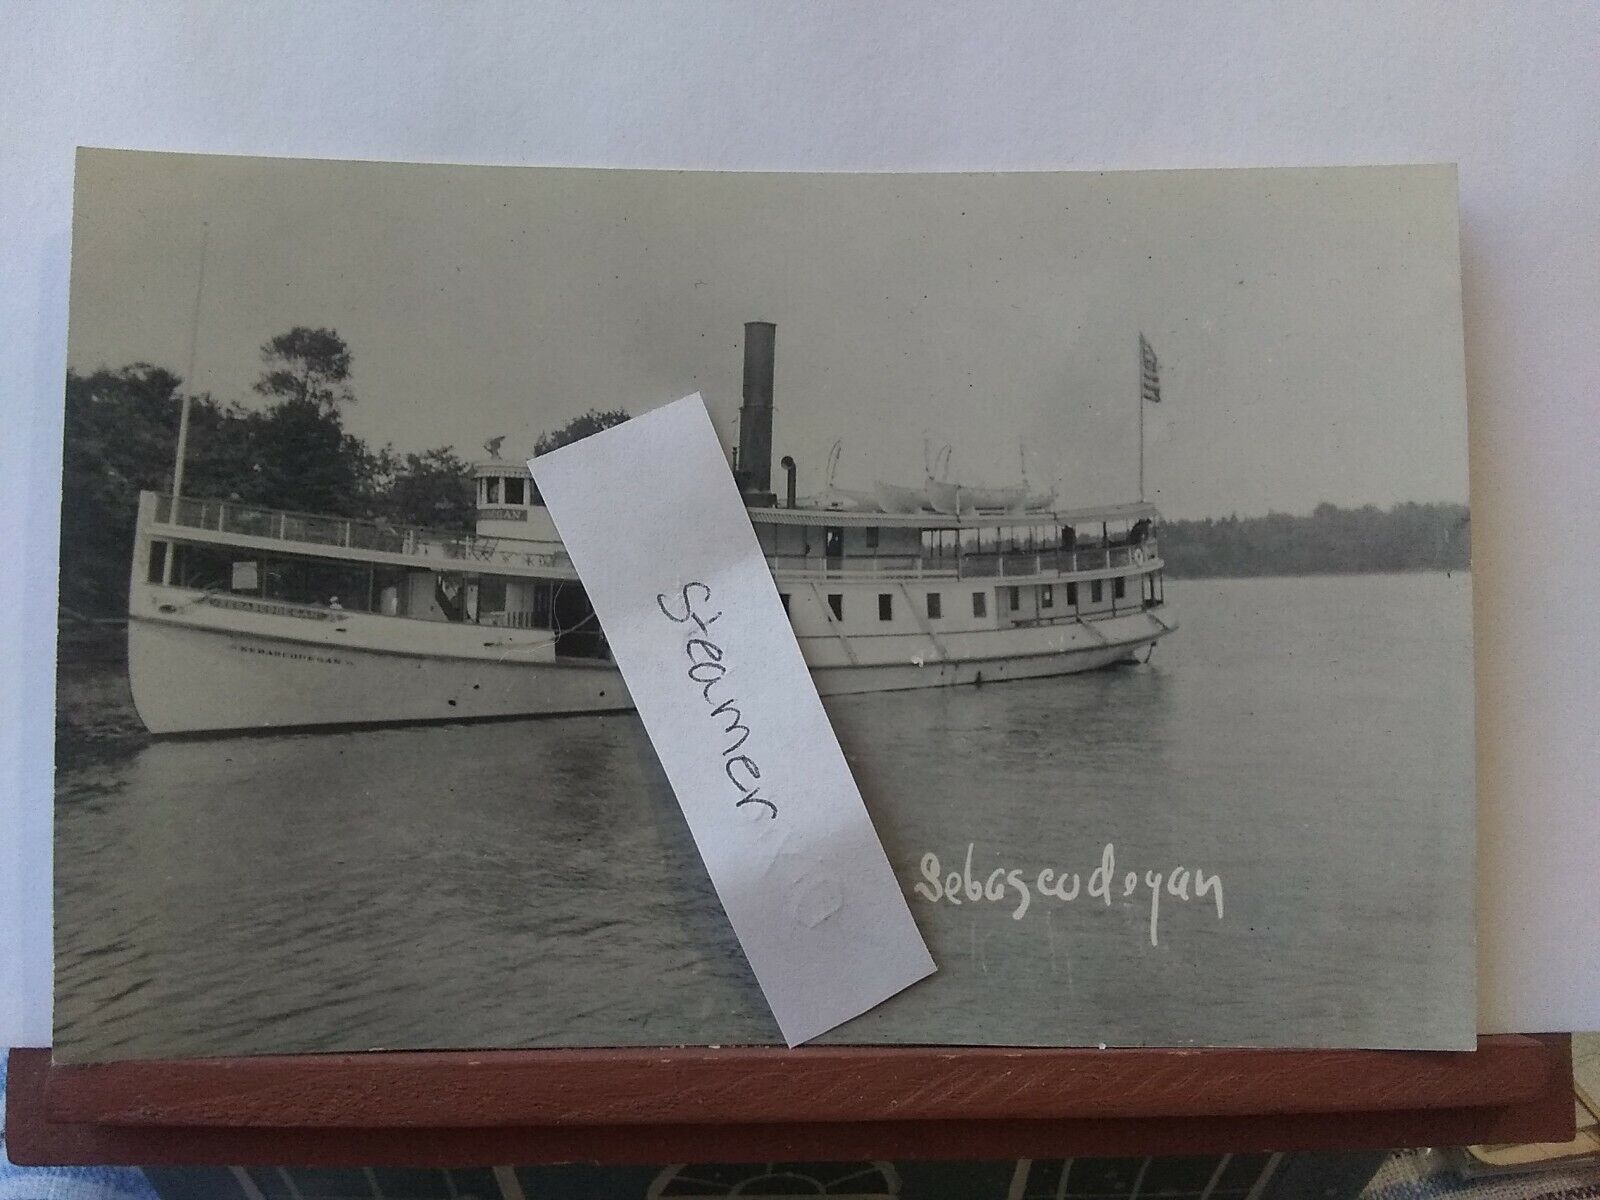 Vintage postcard. The Sebascodegan steam boat. 1895. RPPC